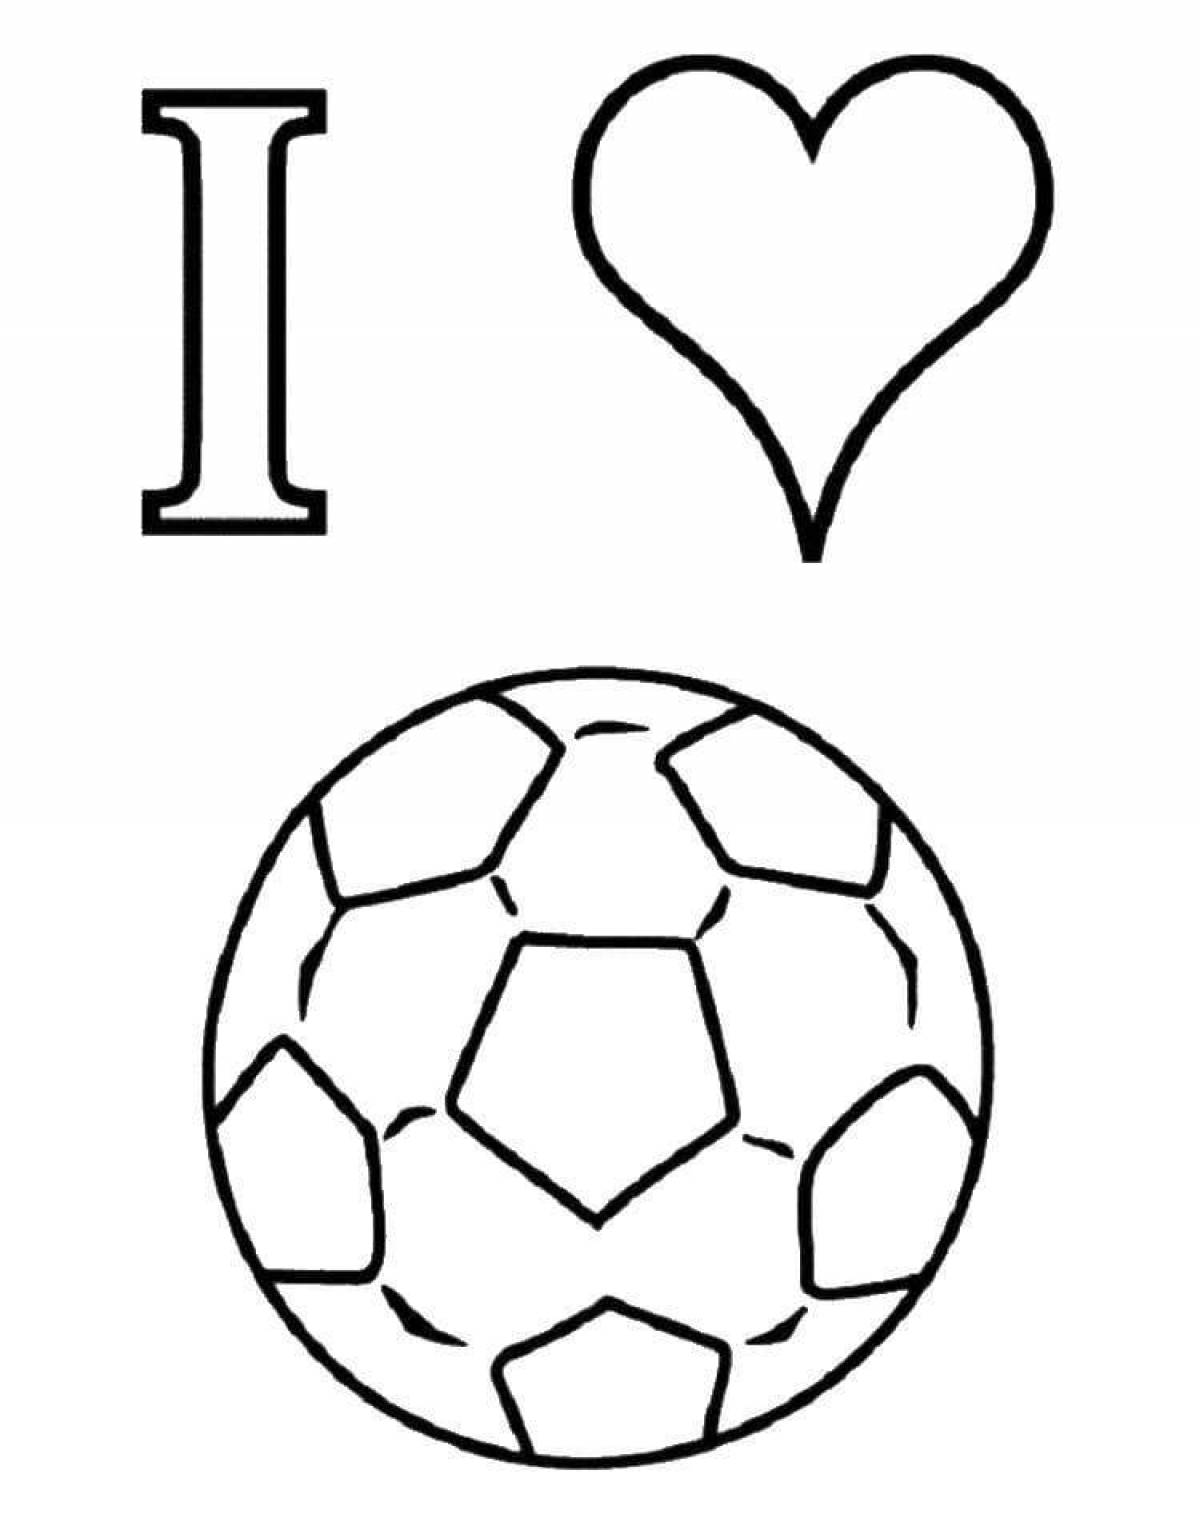 Coloring fantasy soccer ball